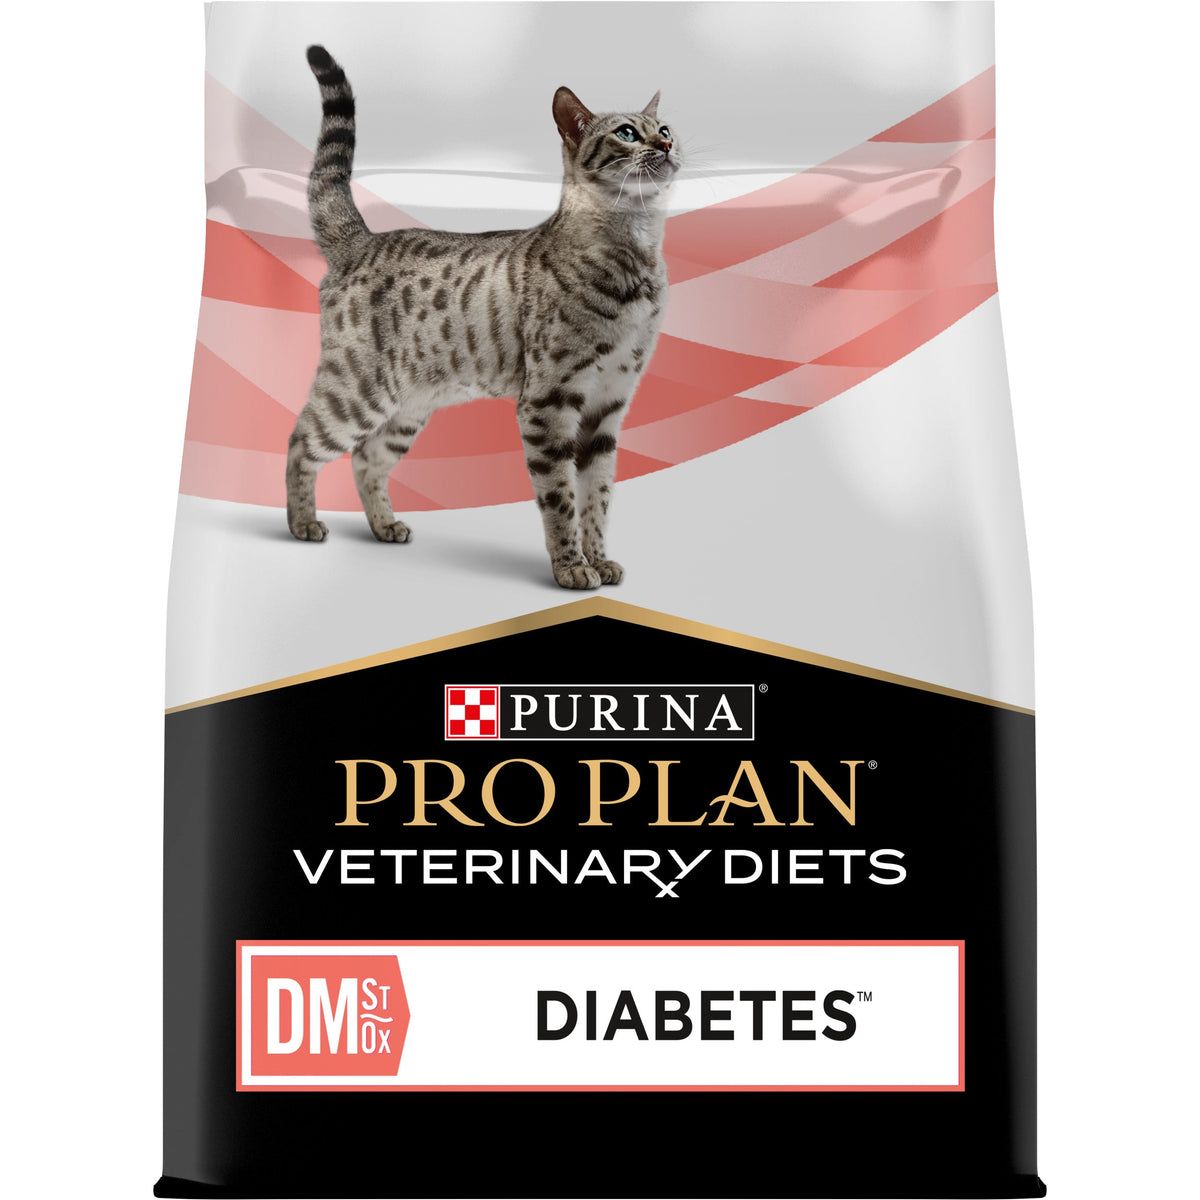 PURINA® PRO PLAN® Veterinary Diets - DM ST/OX Diabetes Management kissanruoka.